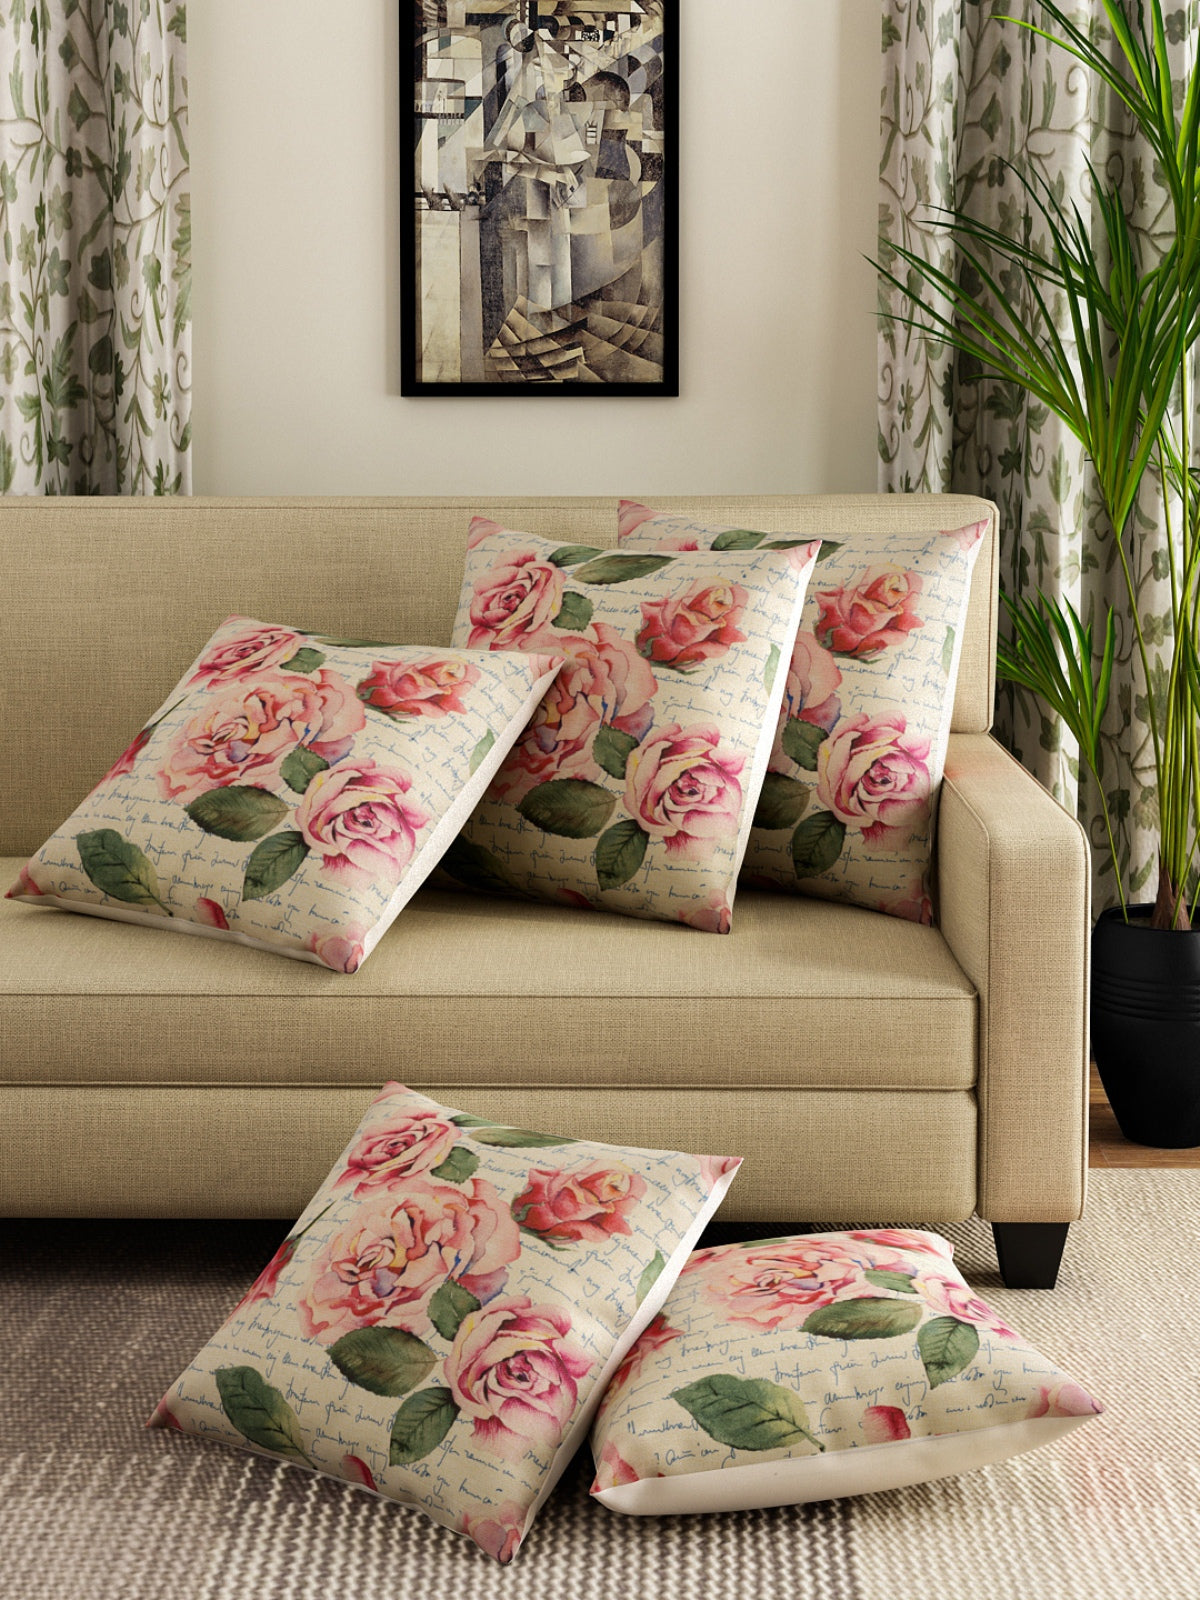 Soft Jute Rose Floral Print Throw Pillow/Cushion Covers 40cm x 40cm, Set of 5 - Multicolor